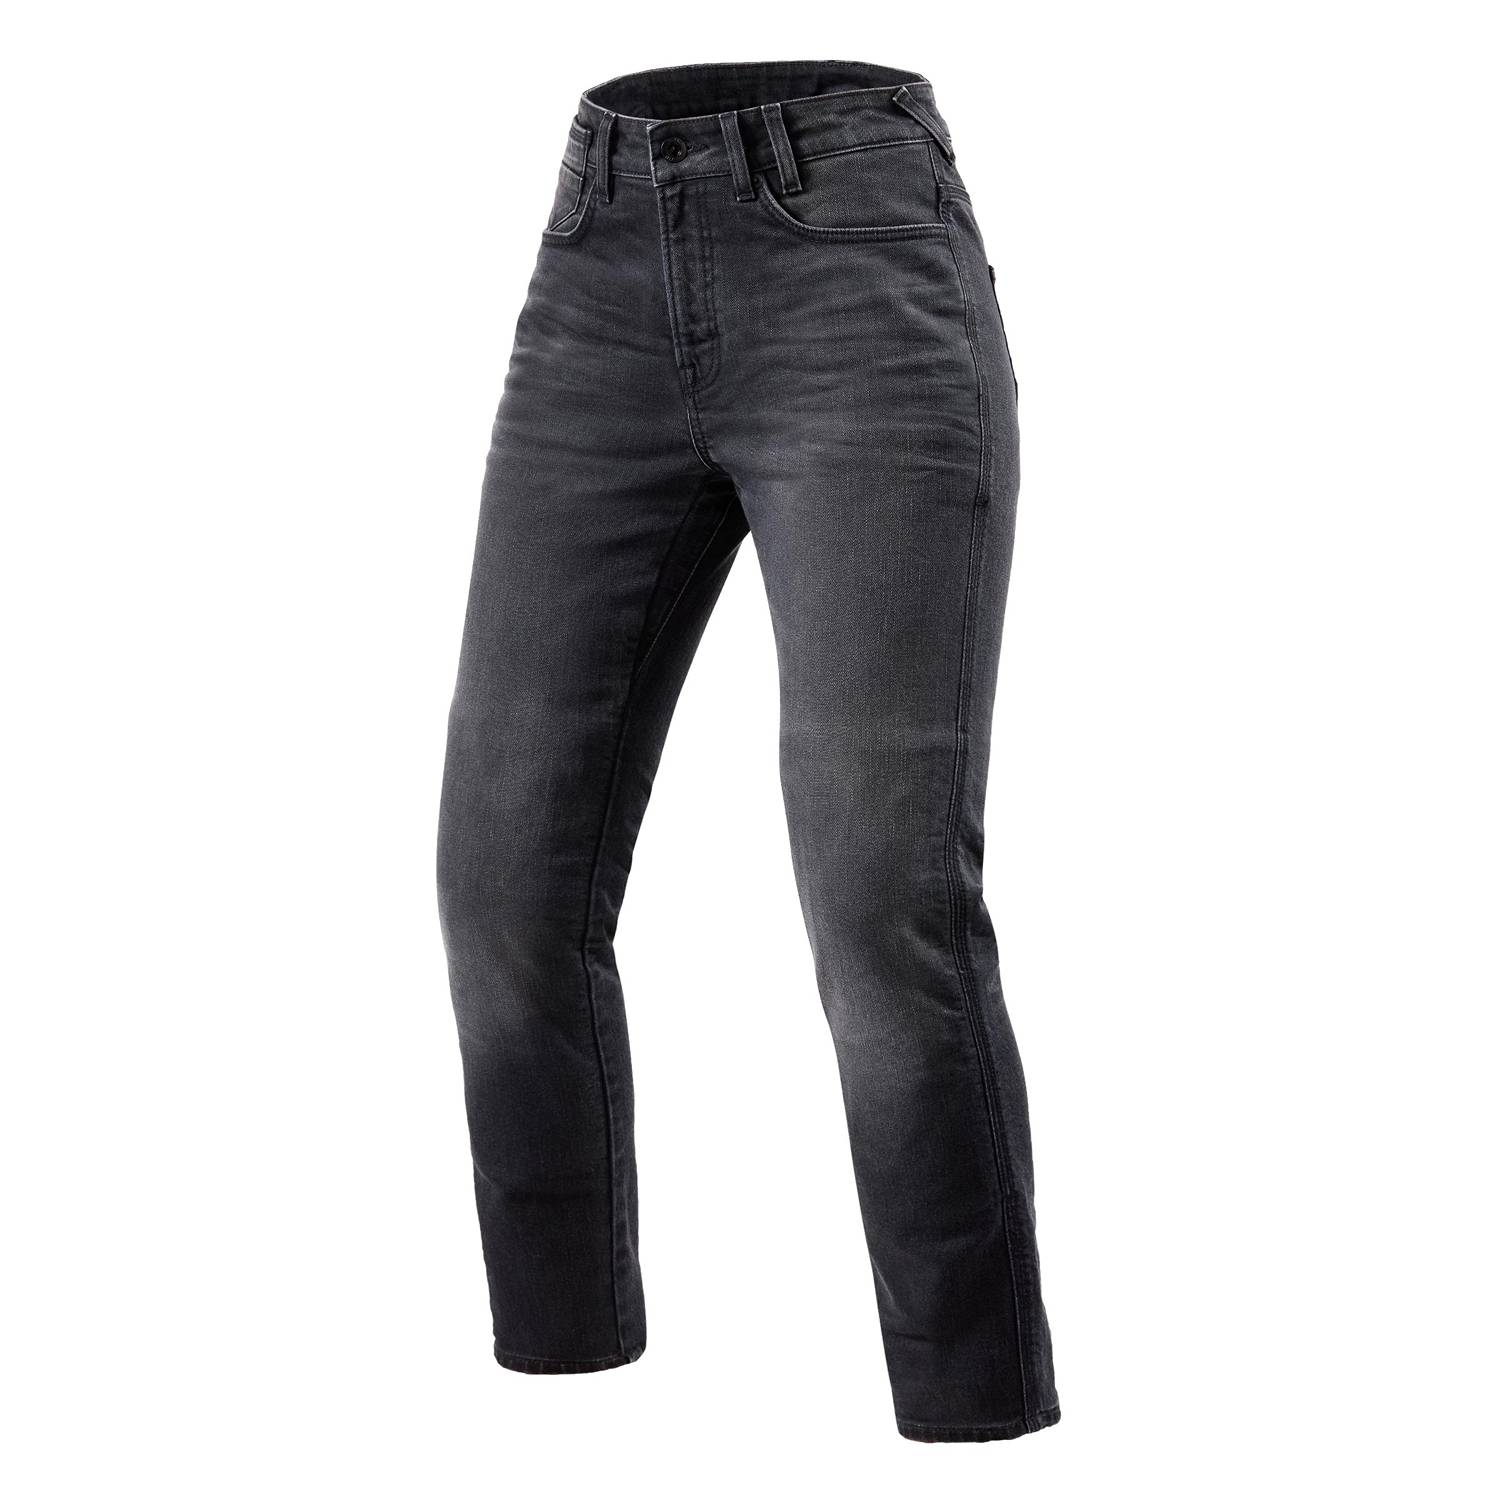 Image of REV'IT! Jeans Victoria 2 Ladies SF Mid Grey Used Motorcycle Jeans Size L30/W26 EN